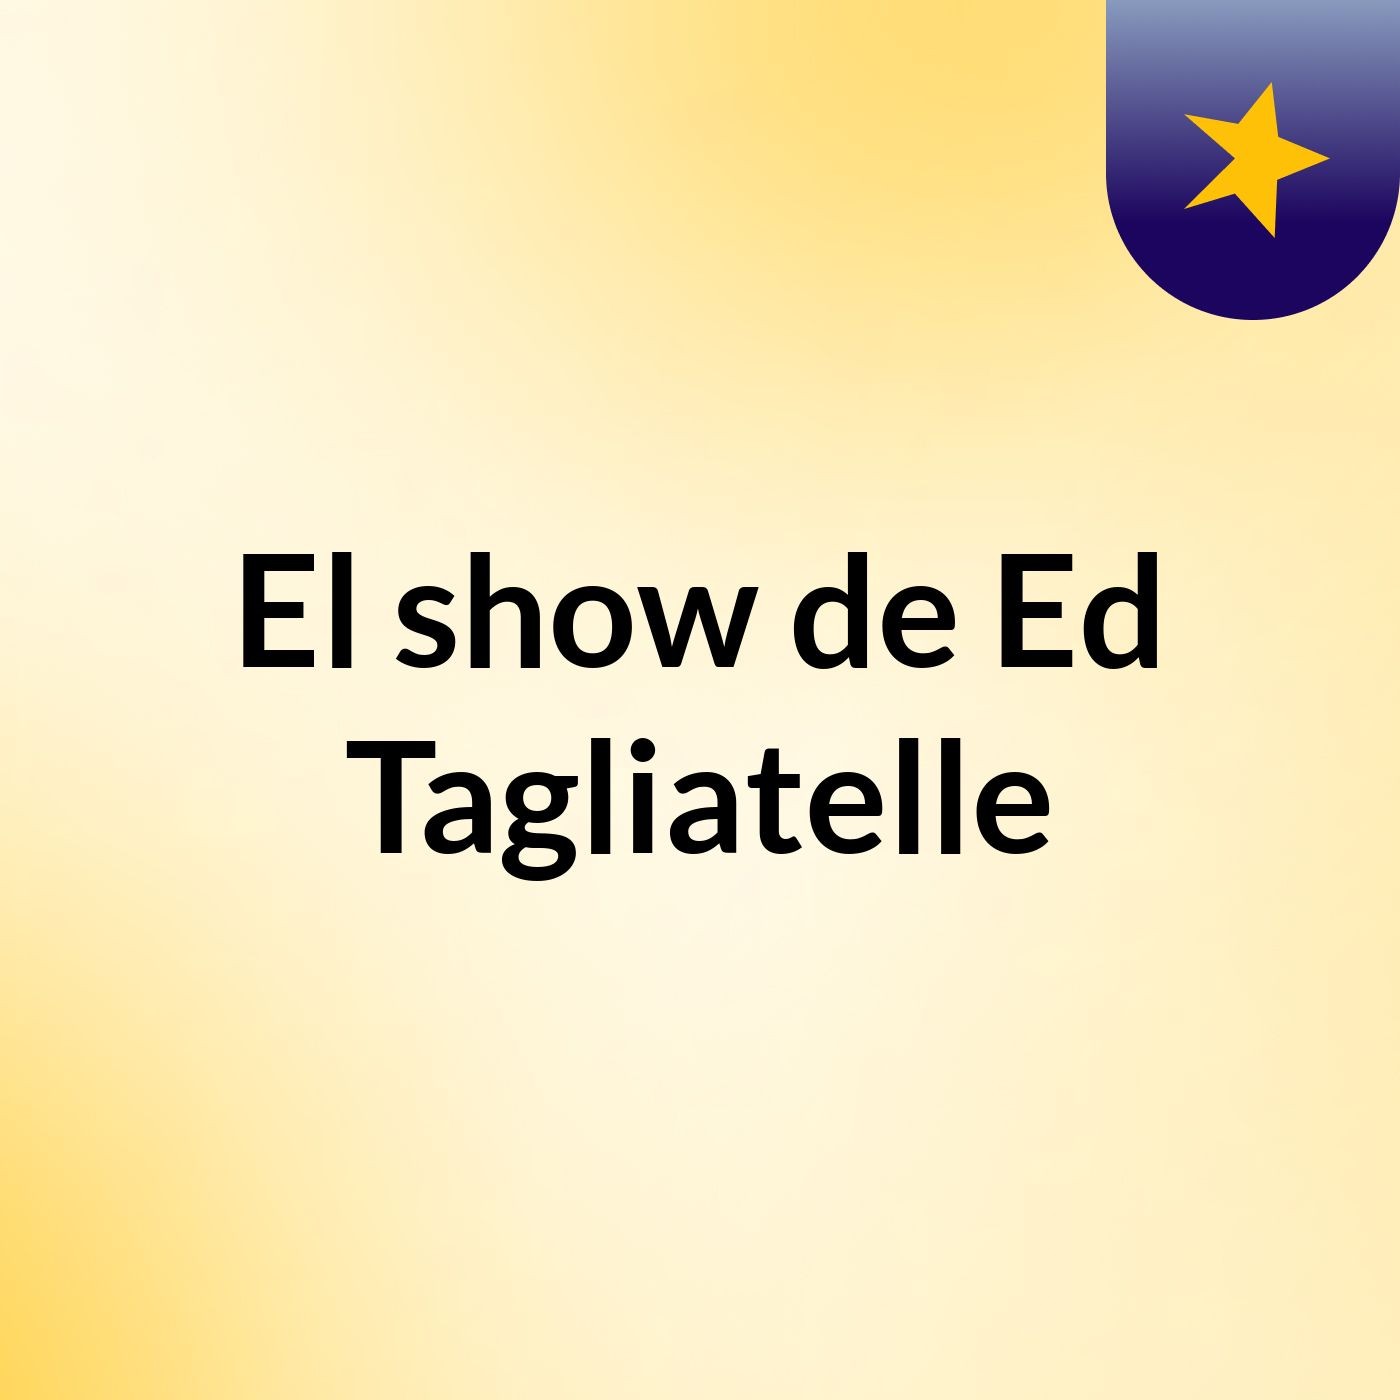 El show de Ed Tagliatelle